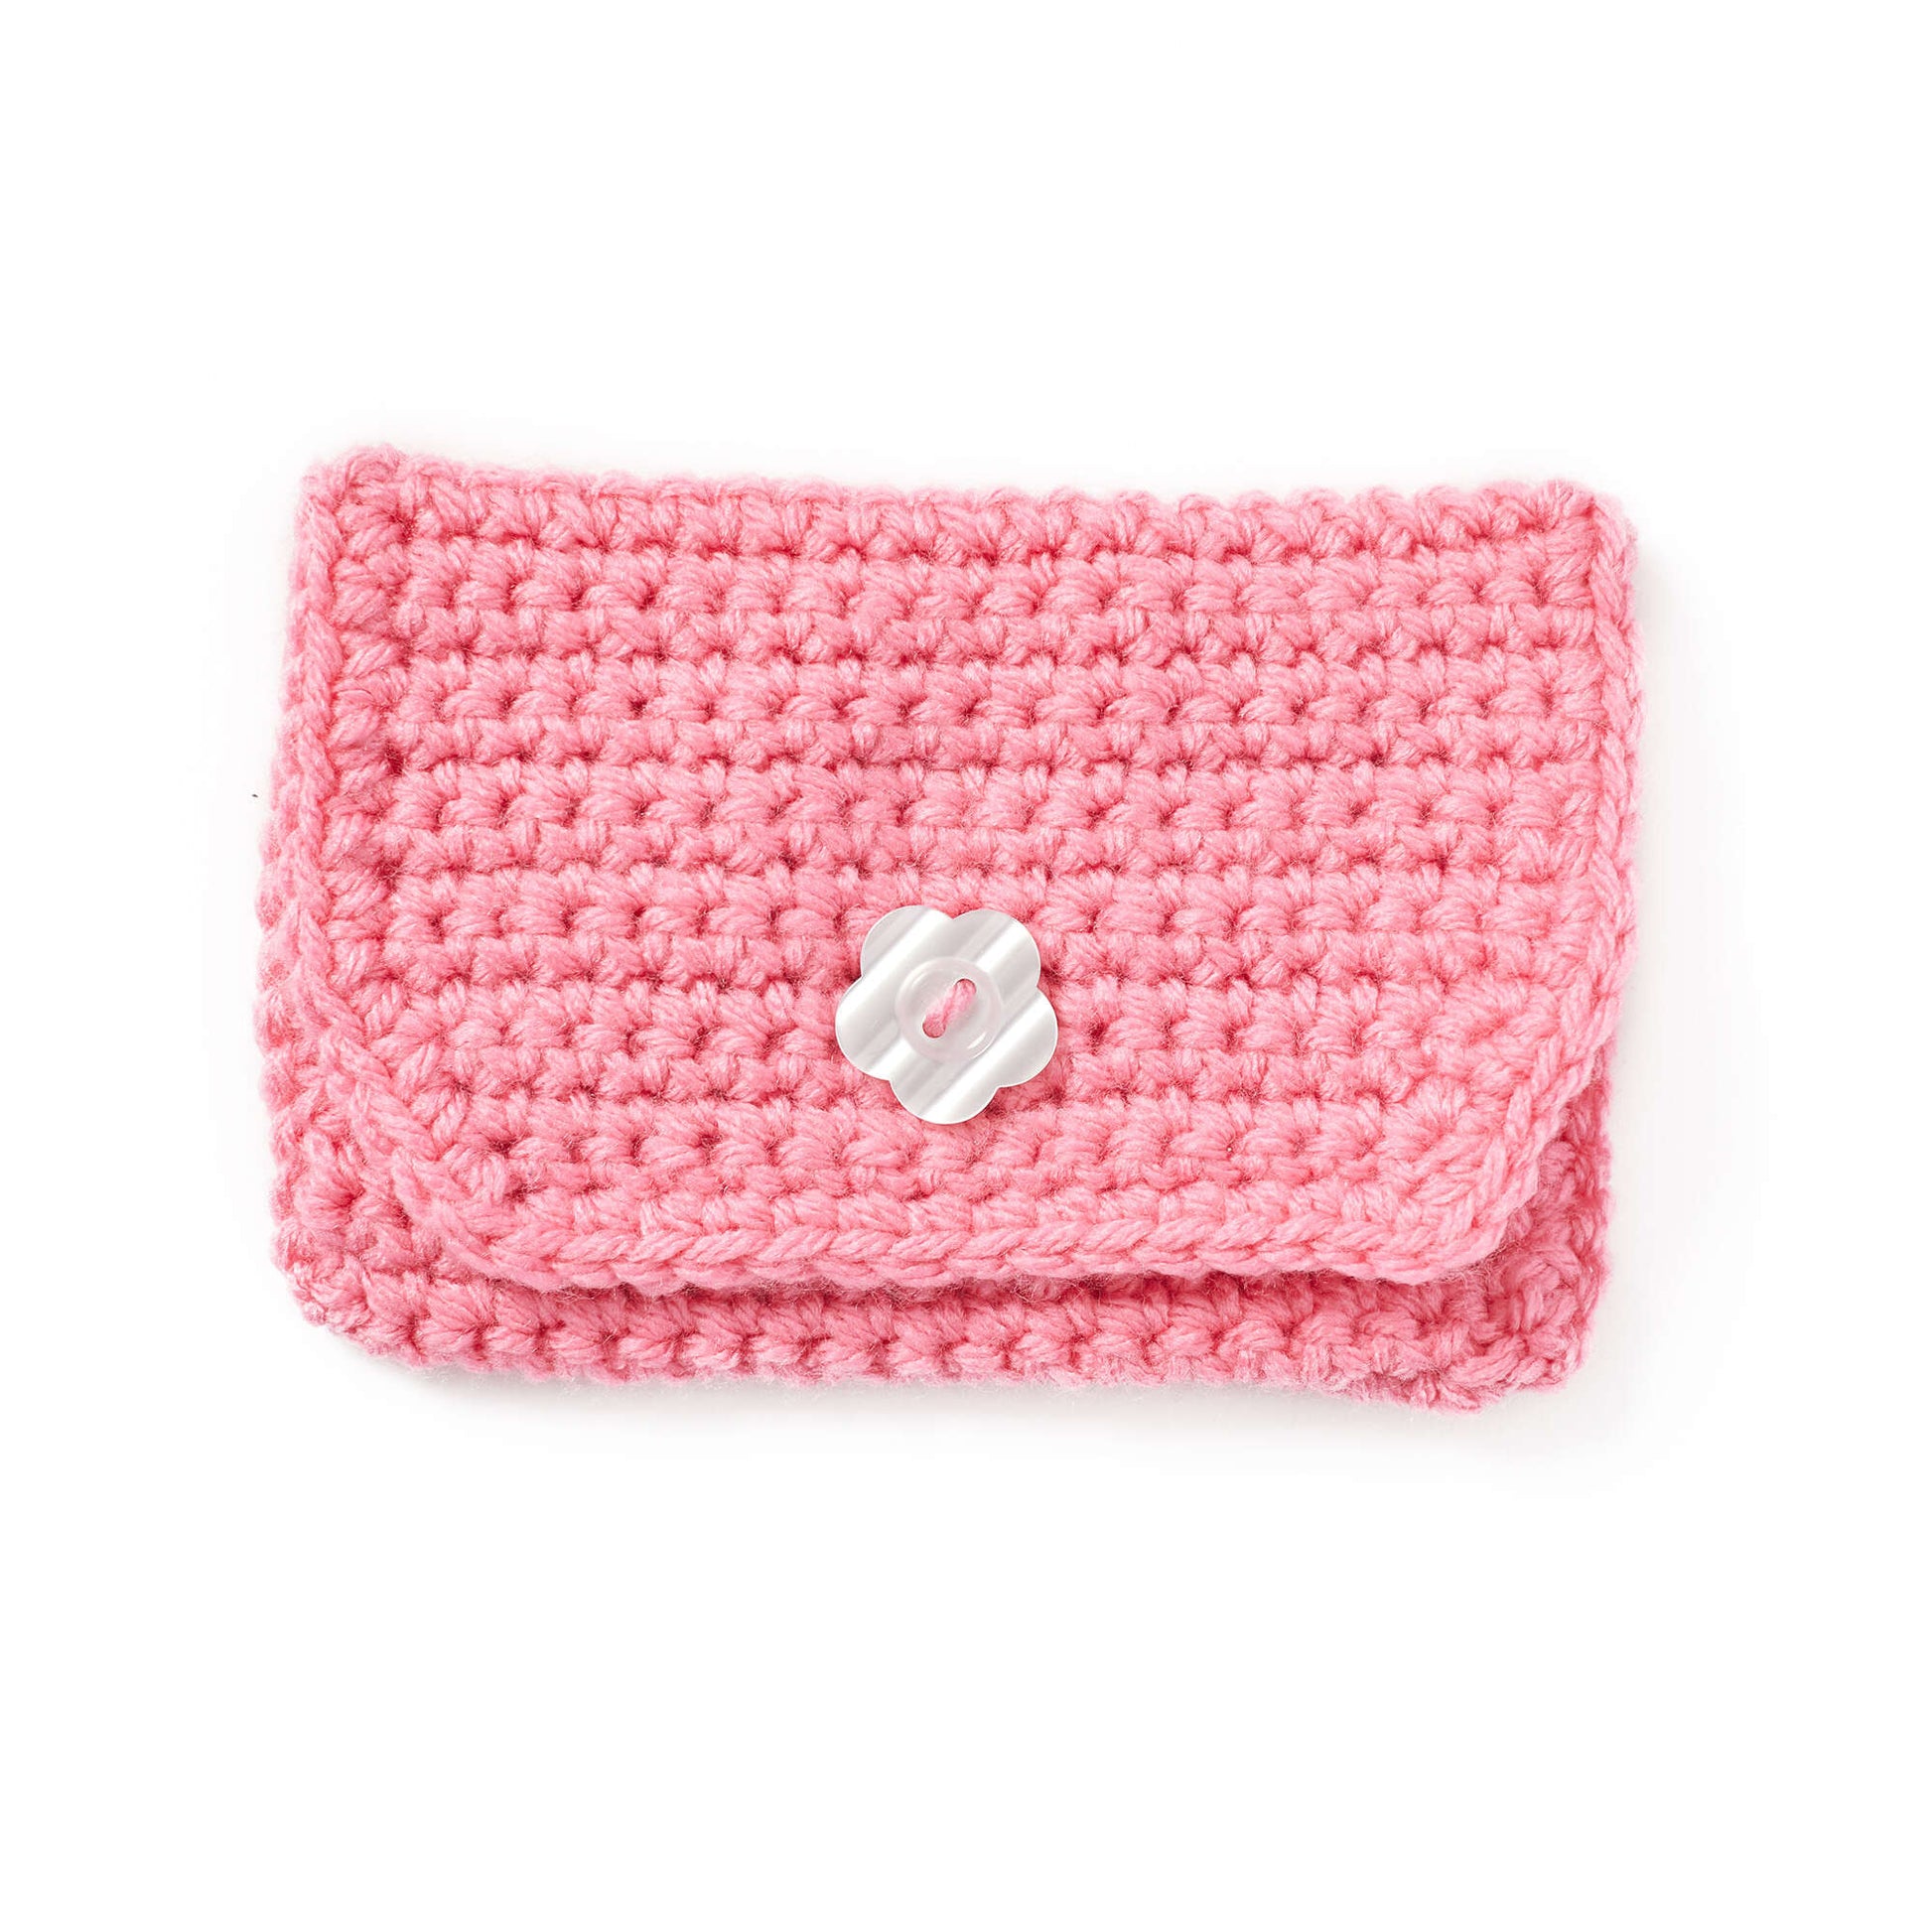 Free Red Heart Crochet Parent & Child Belt Bags Pattern